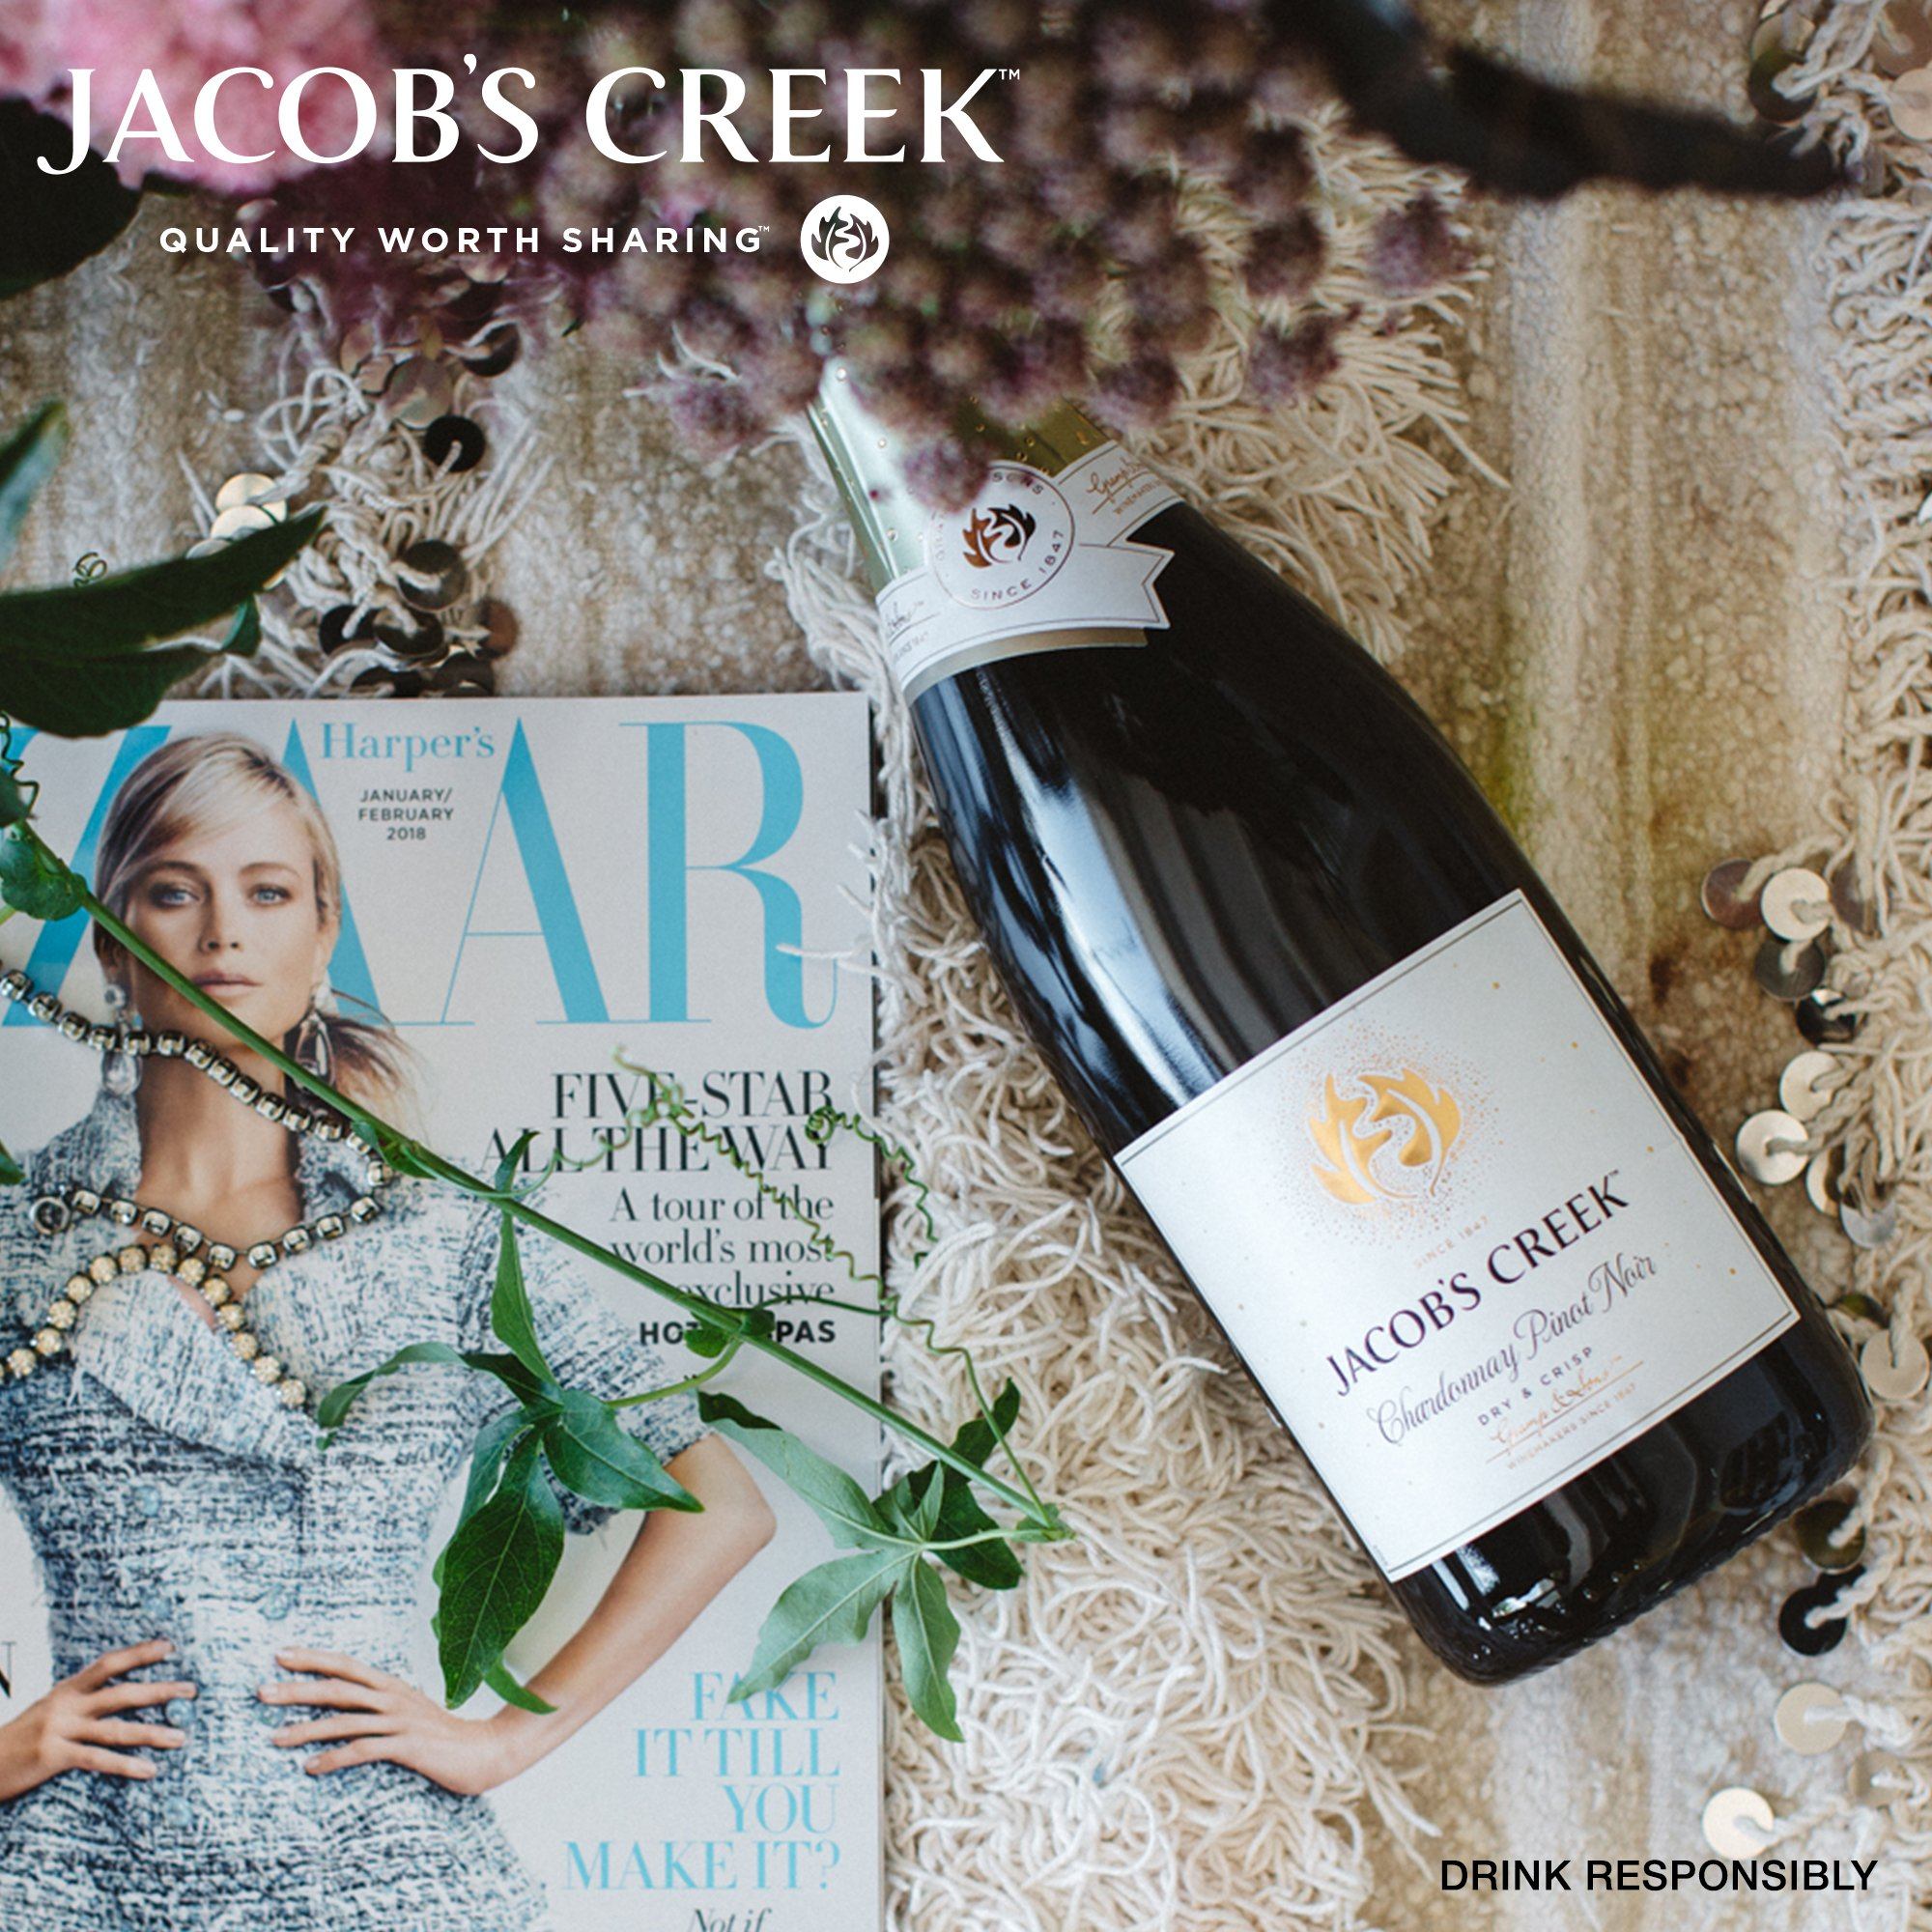 Jacob's Creek Sparkling Chardonnay Pinot Noir 750ml at ₱949.00